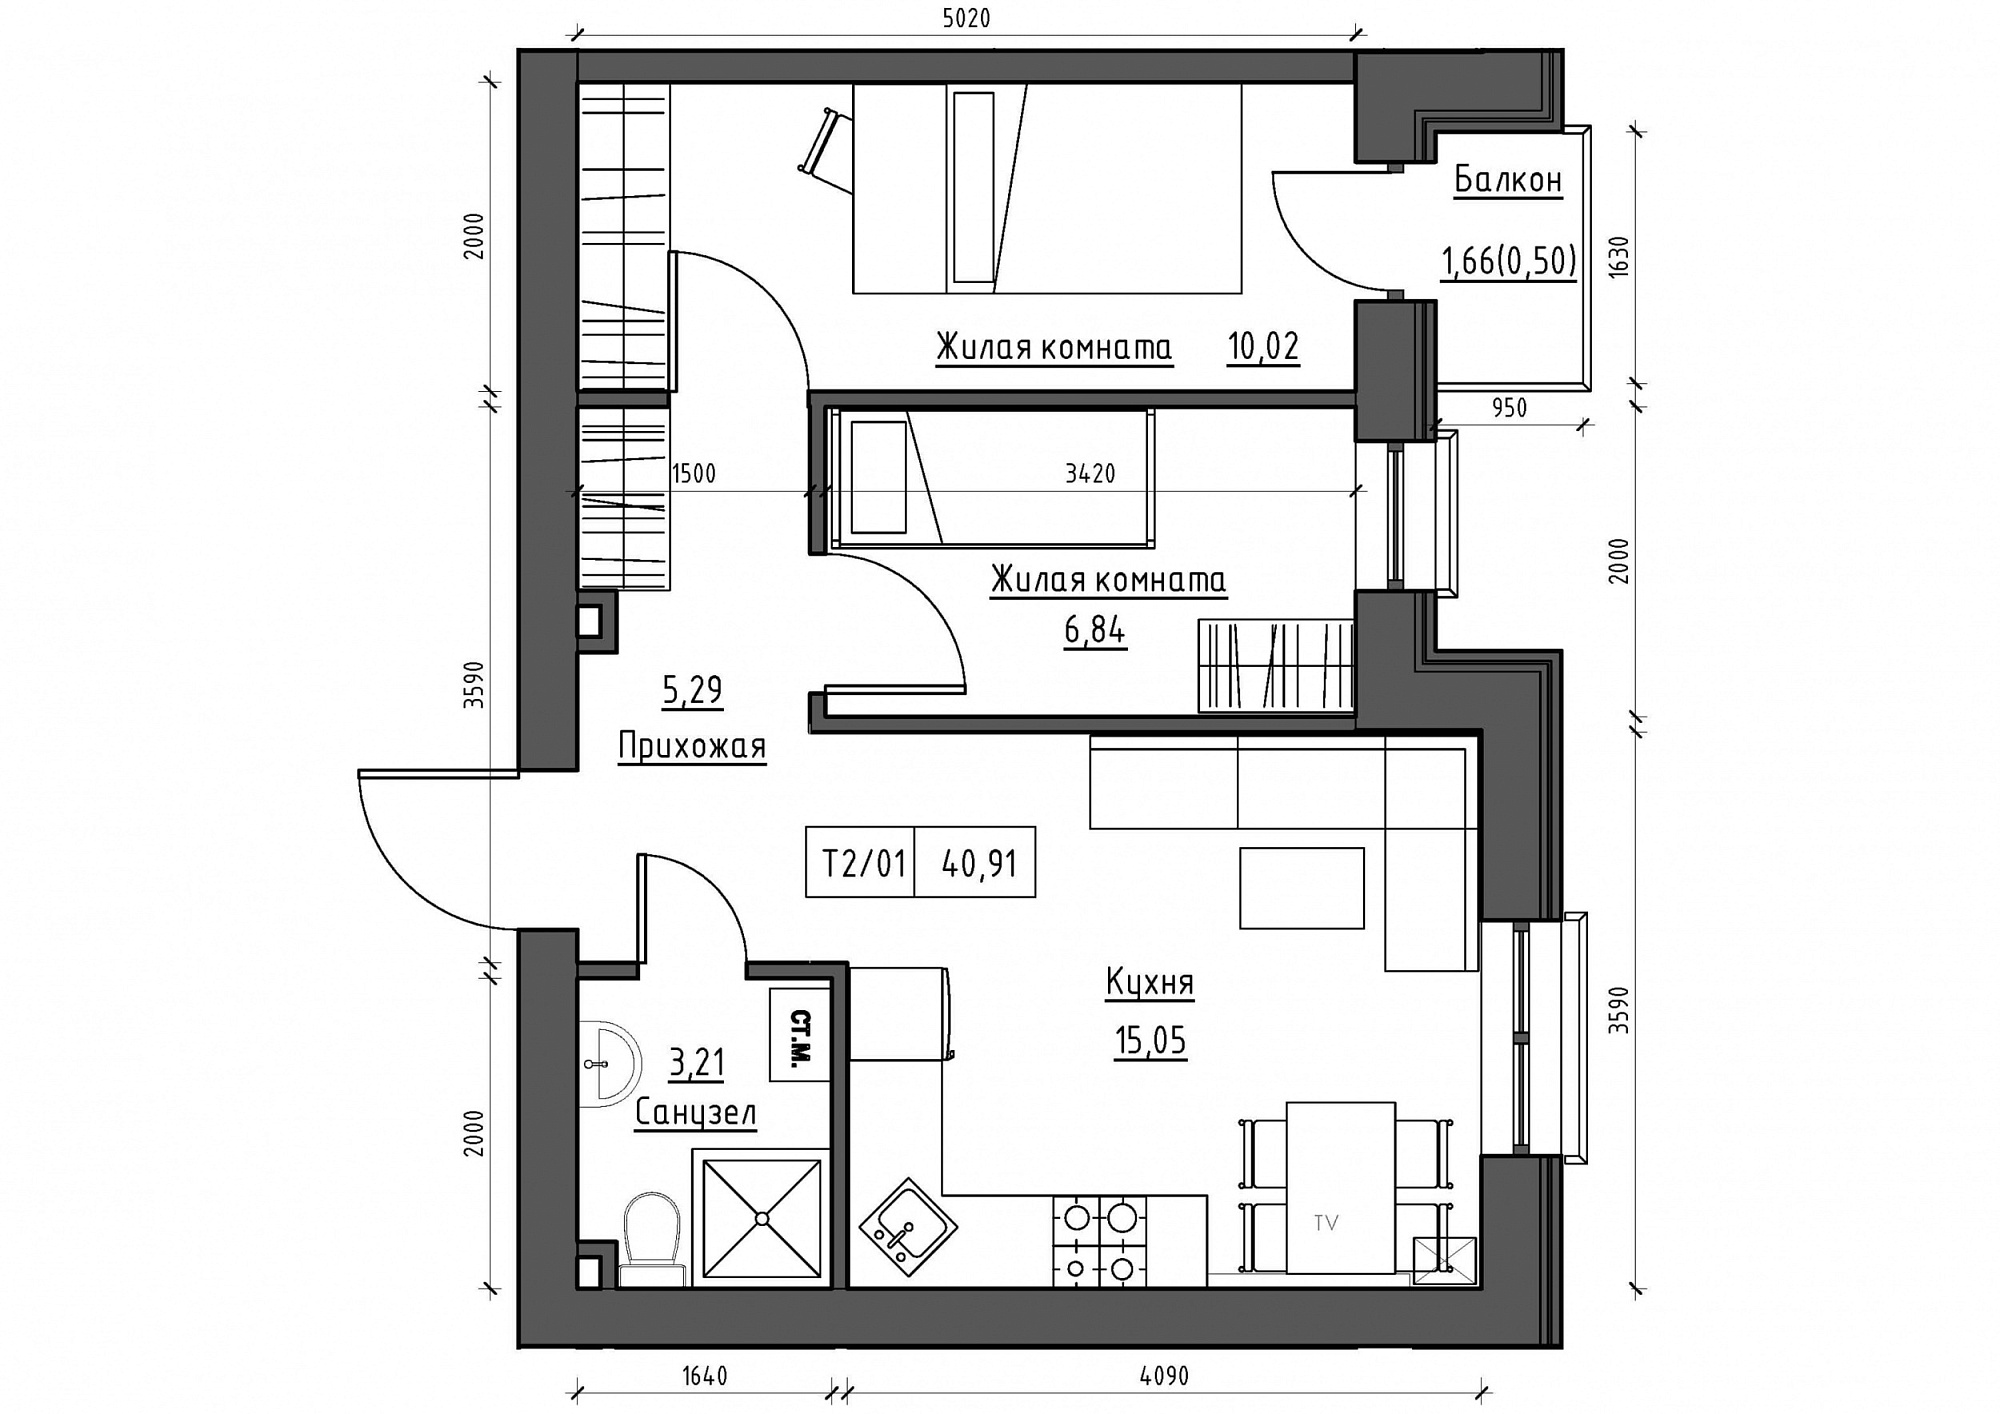 Planning 2-rm flats area 40.91m2, KS-011-04/0006.